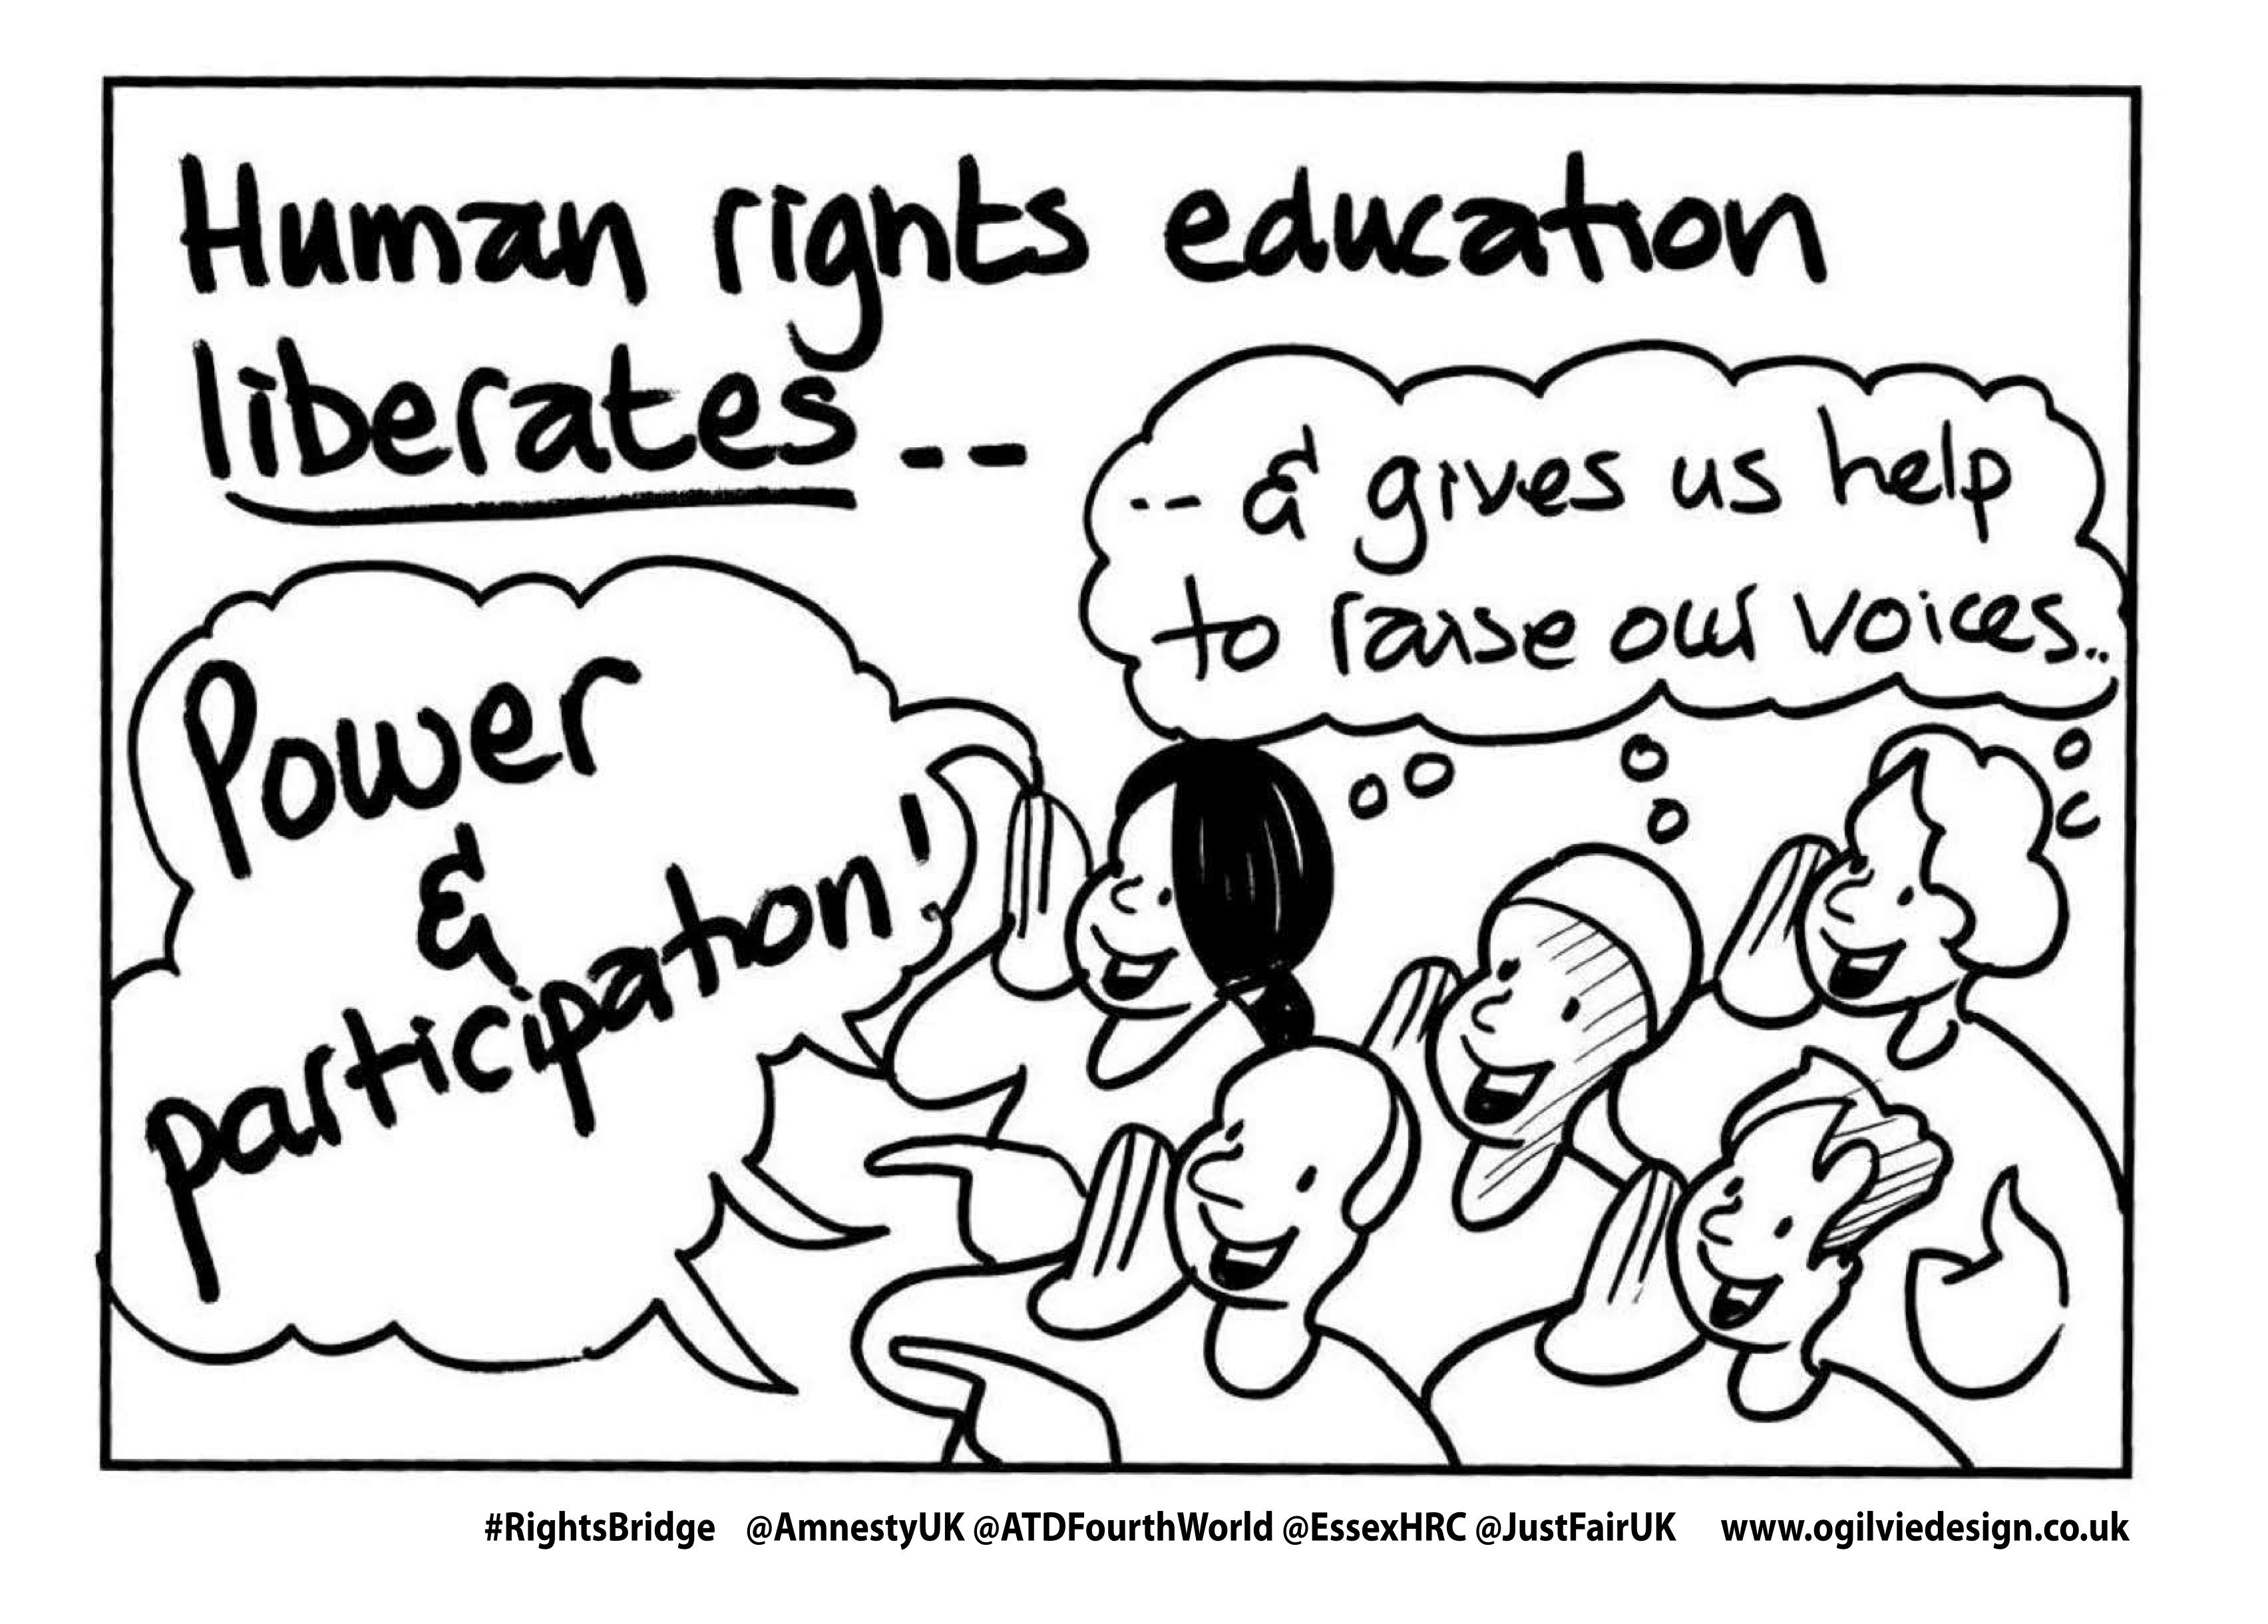 Cartoon human rights education liberates